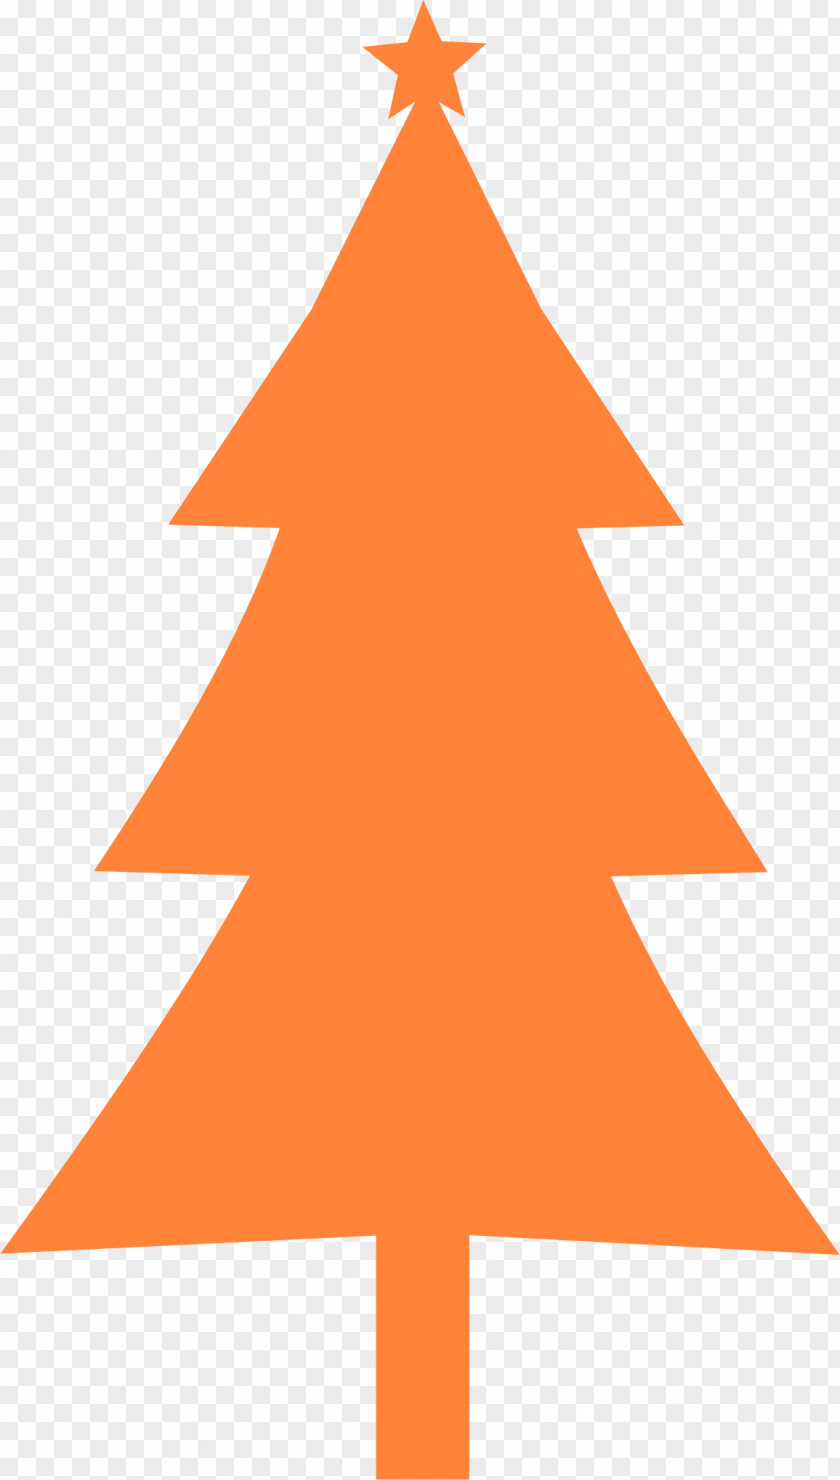 Orange Tree Christmas Silhouette Clip Art PNG